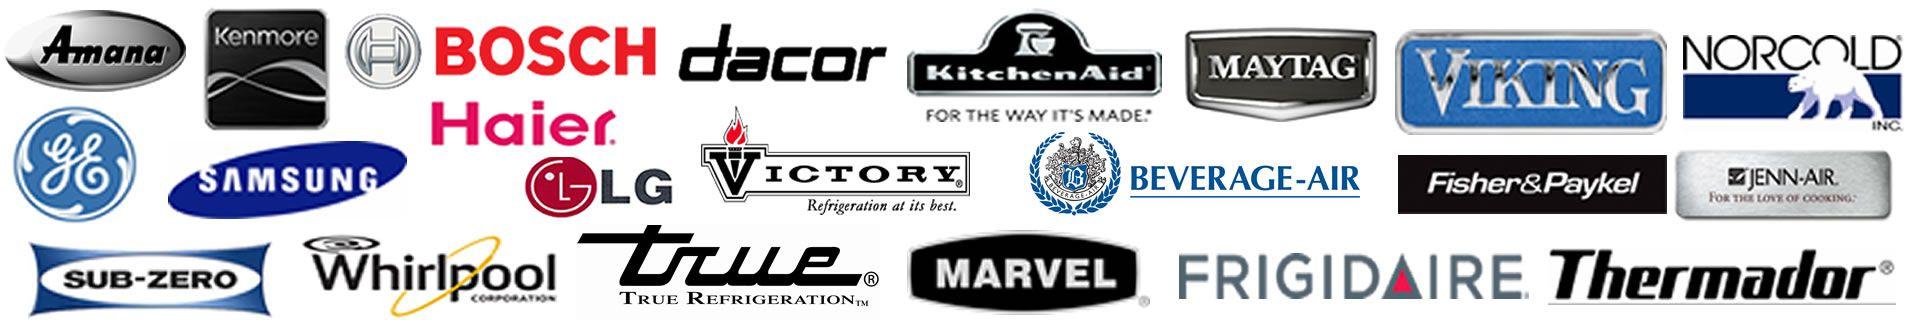 Maytag Refrigeration Logo - Any Appliance Repair Co. Any Appliance Repair Co.in San Mateo